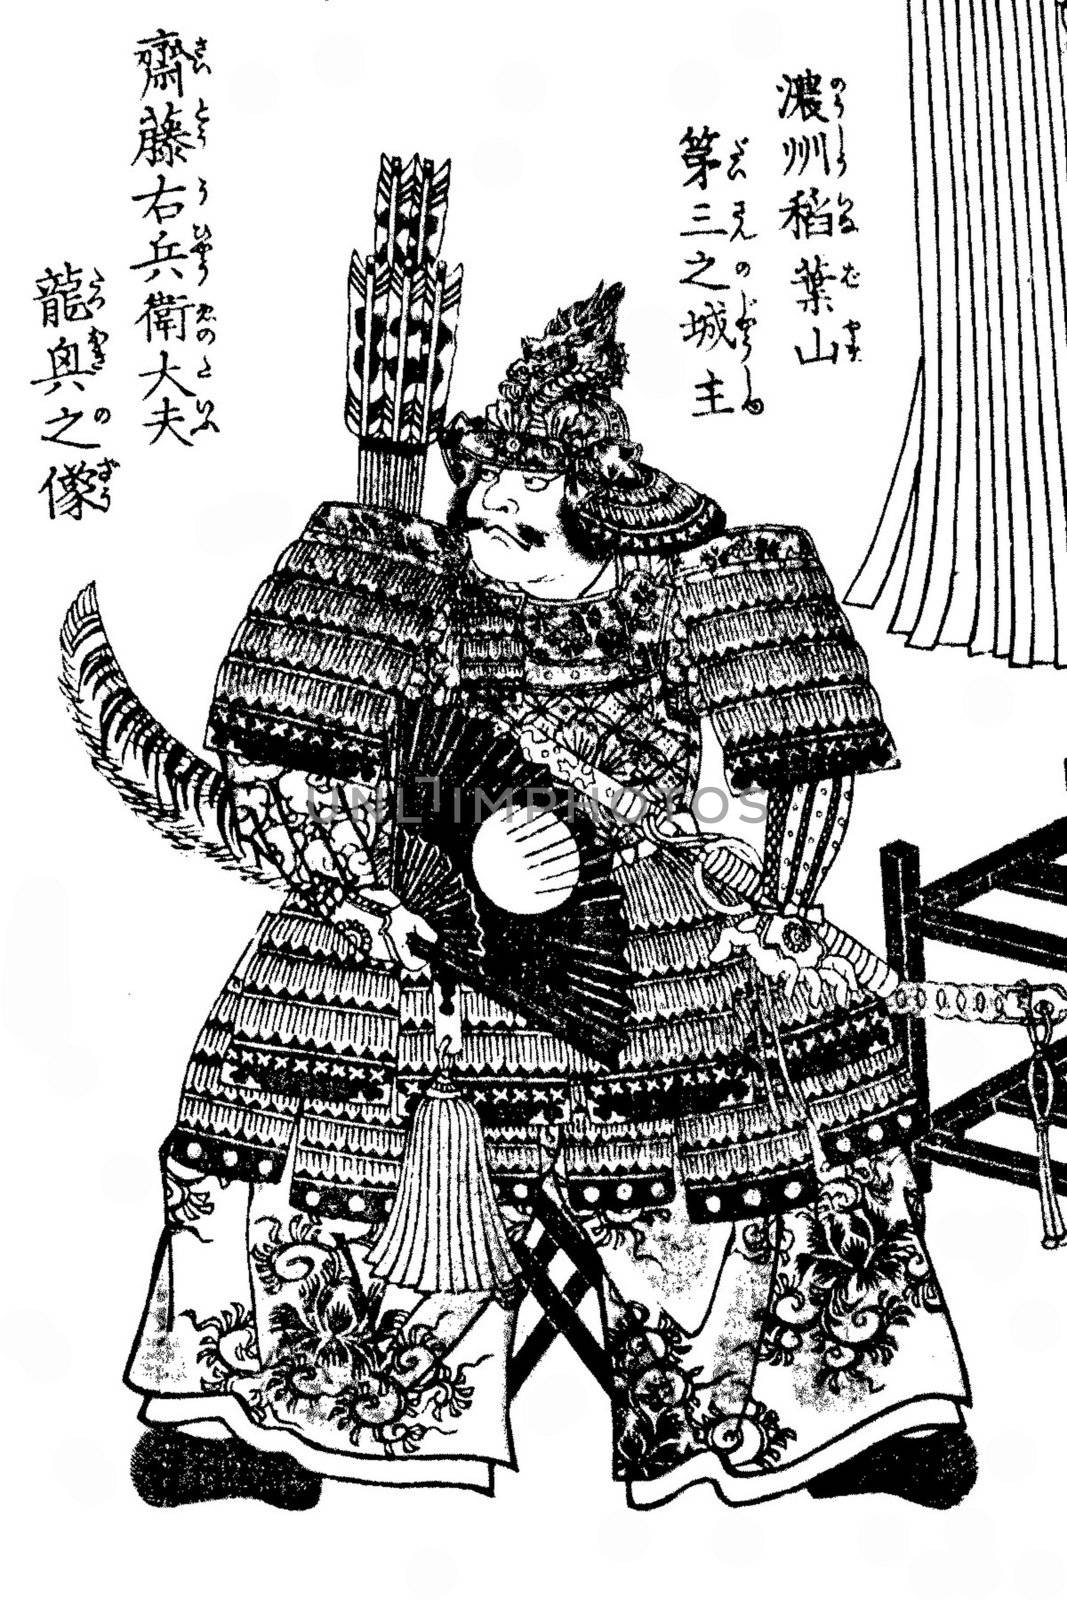 Medieval engraving of amurai warrior